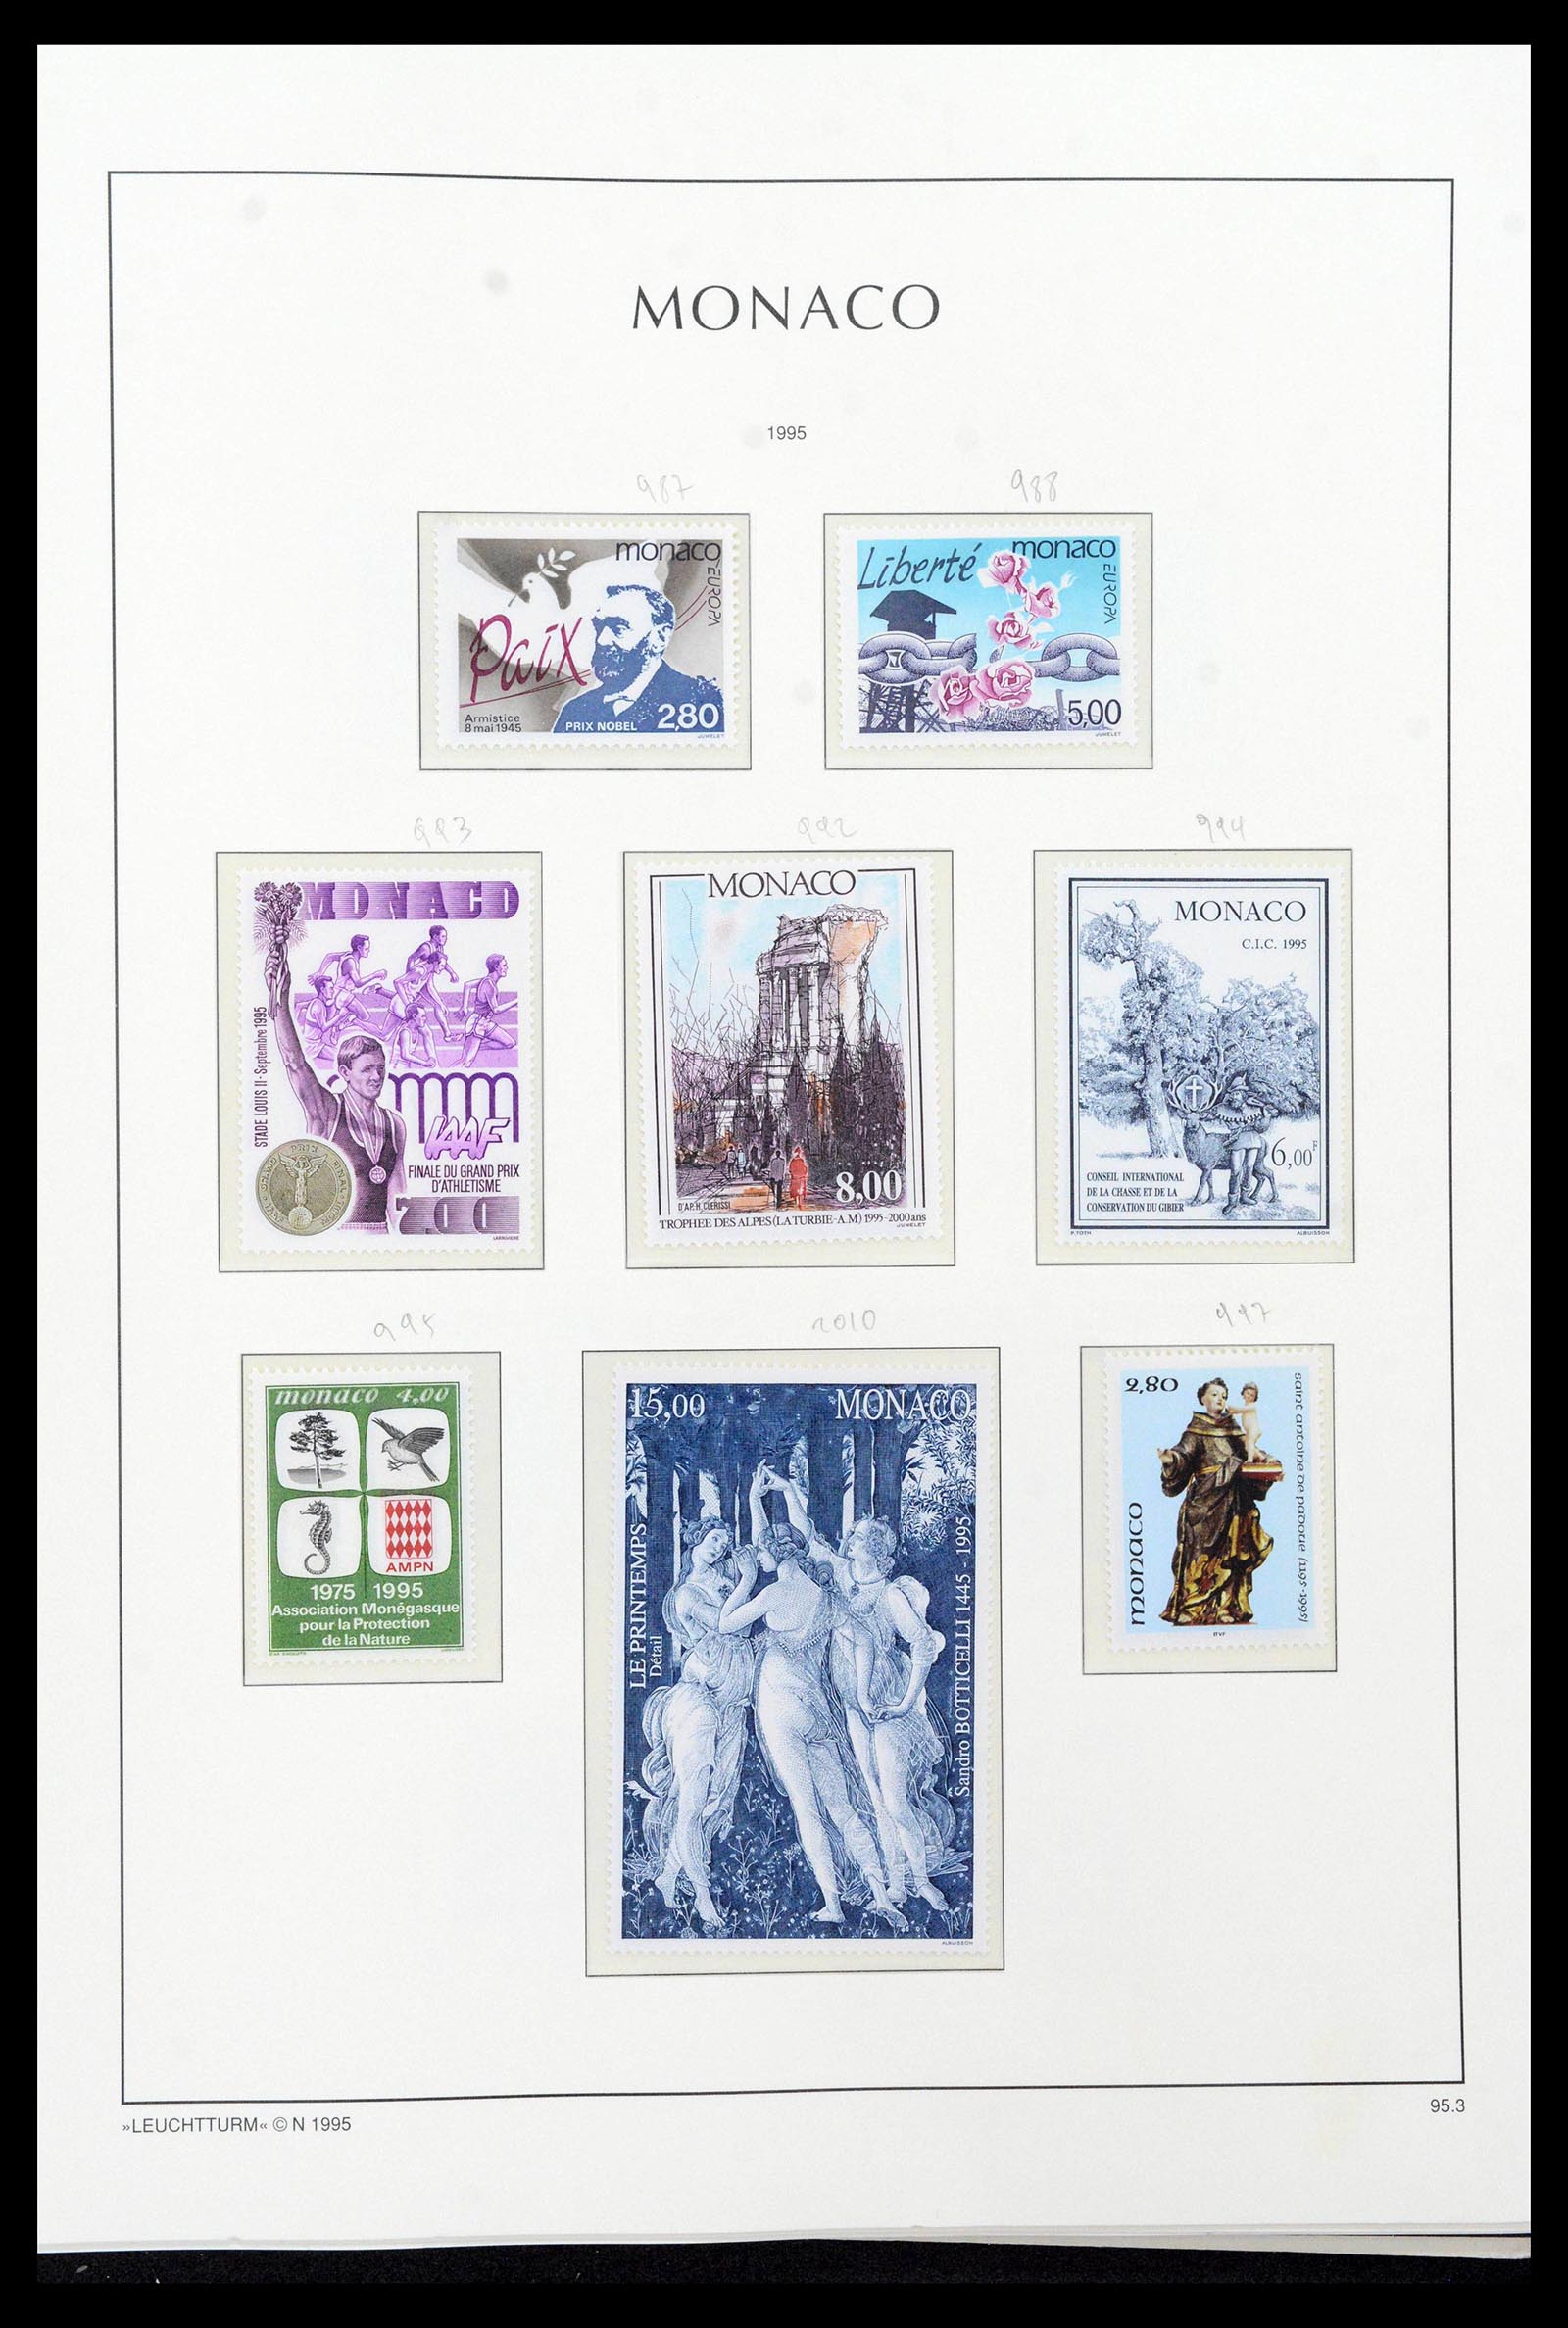 39250 0264 - Stamp collection 39250 Monaco 1885-1995.